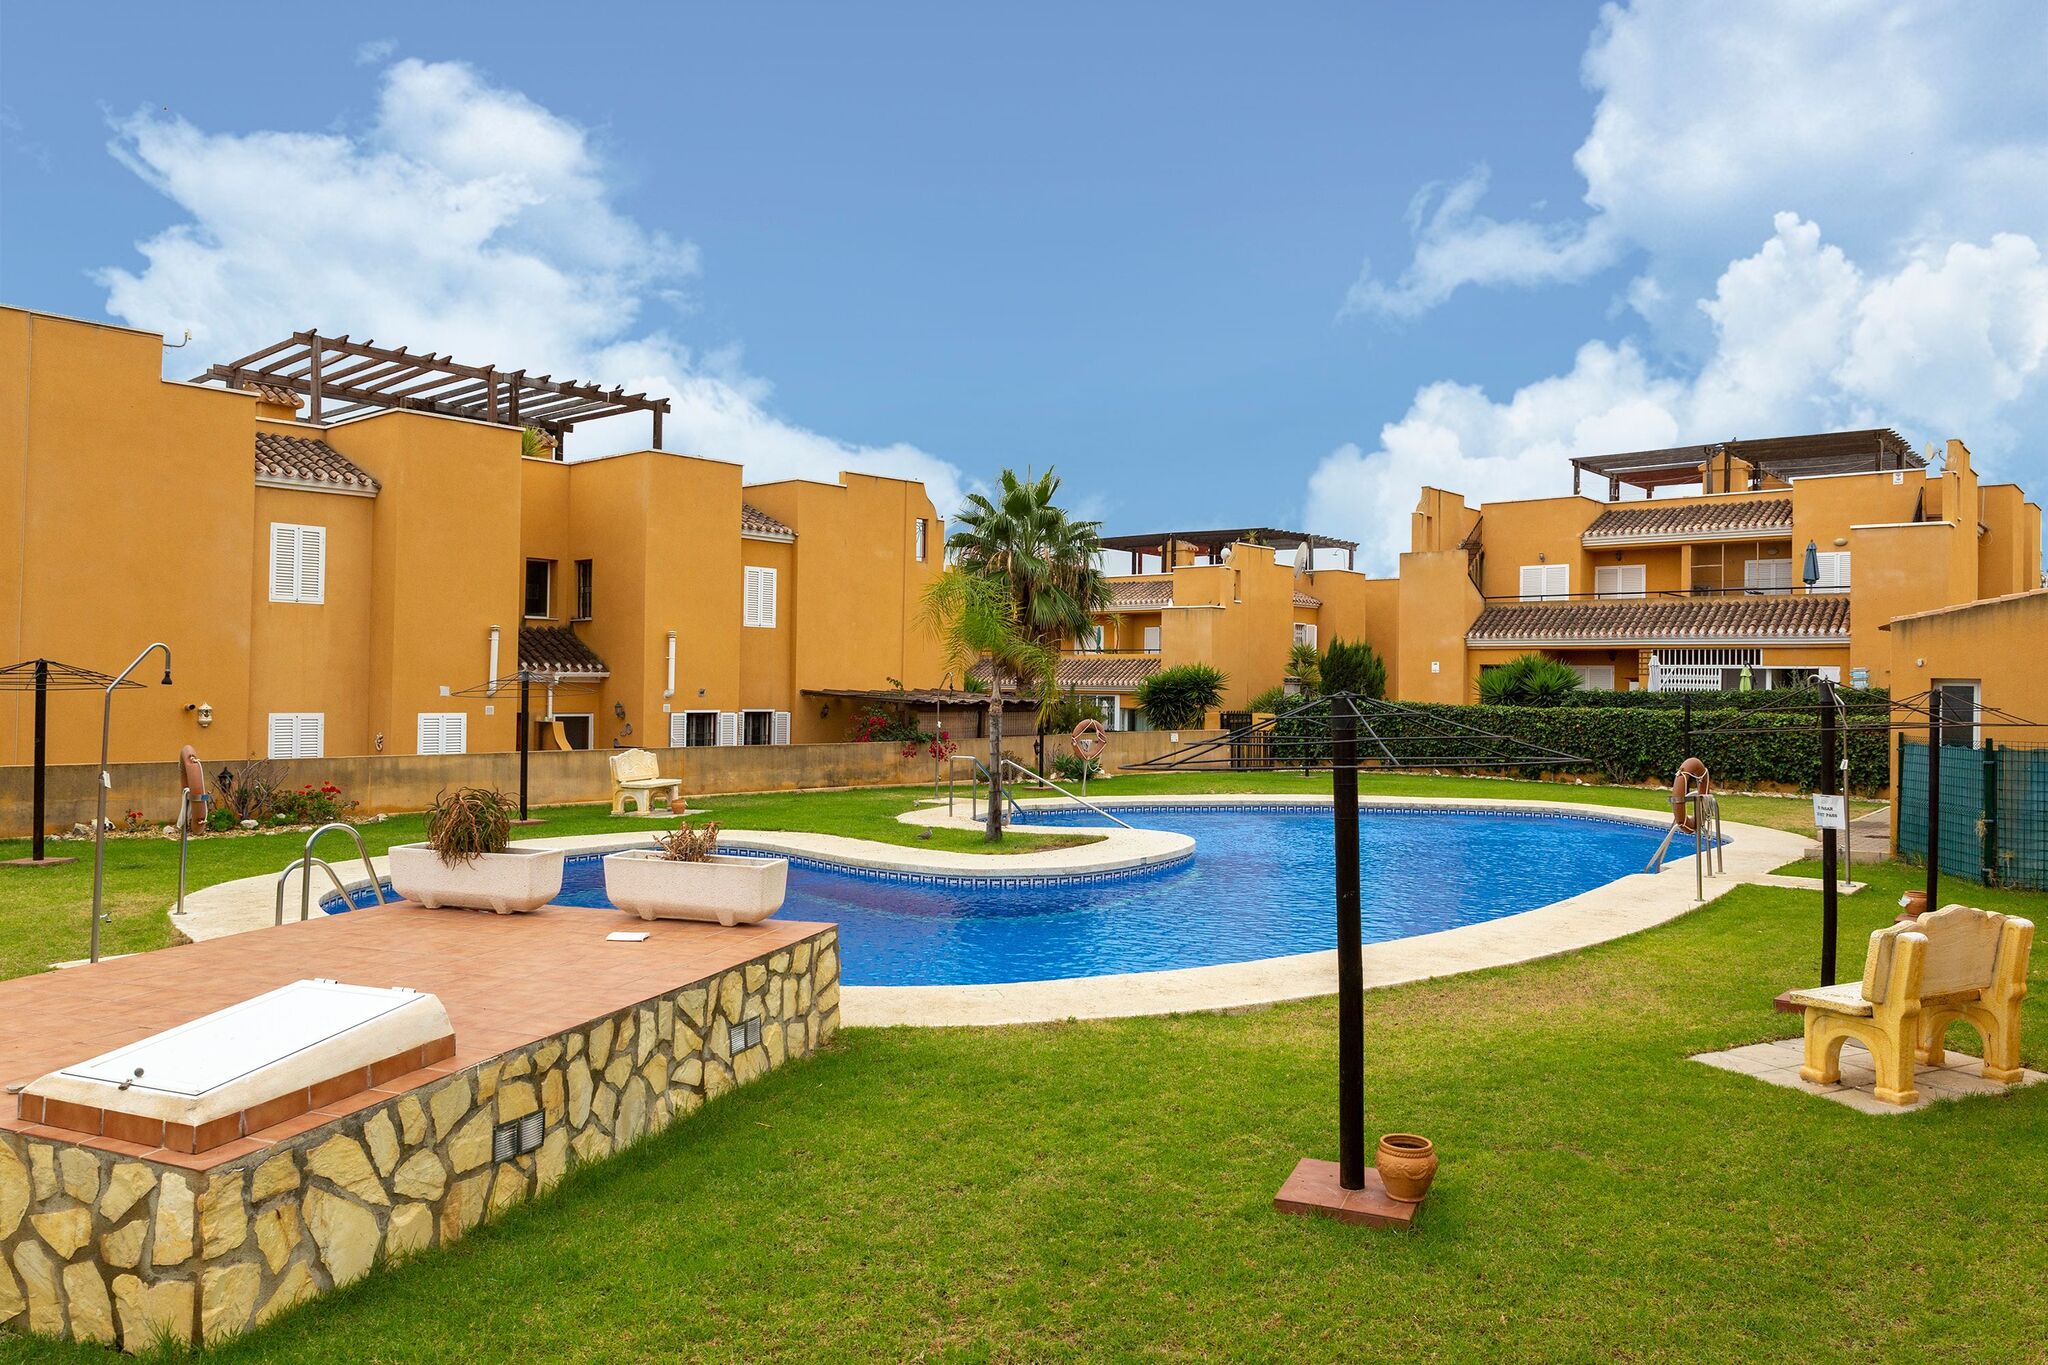 Maison de vacances spacieuse à Los Gallardos avec piscine